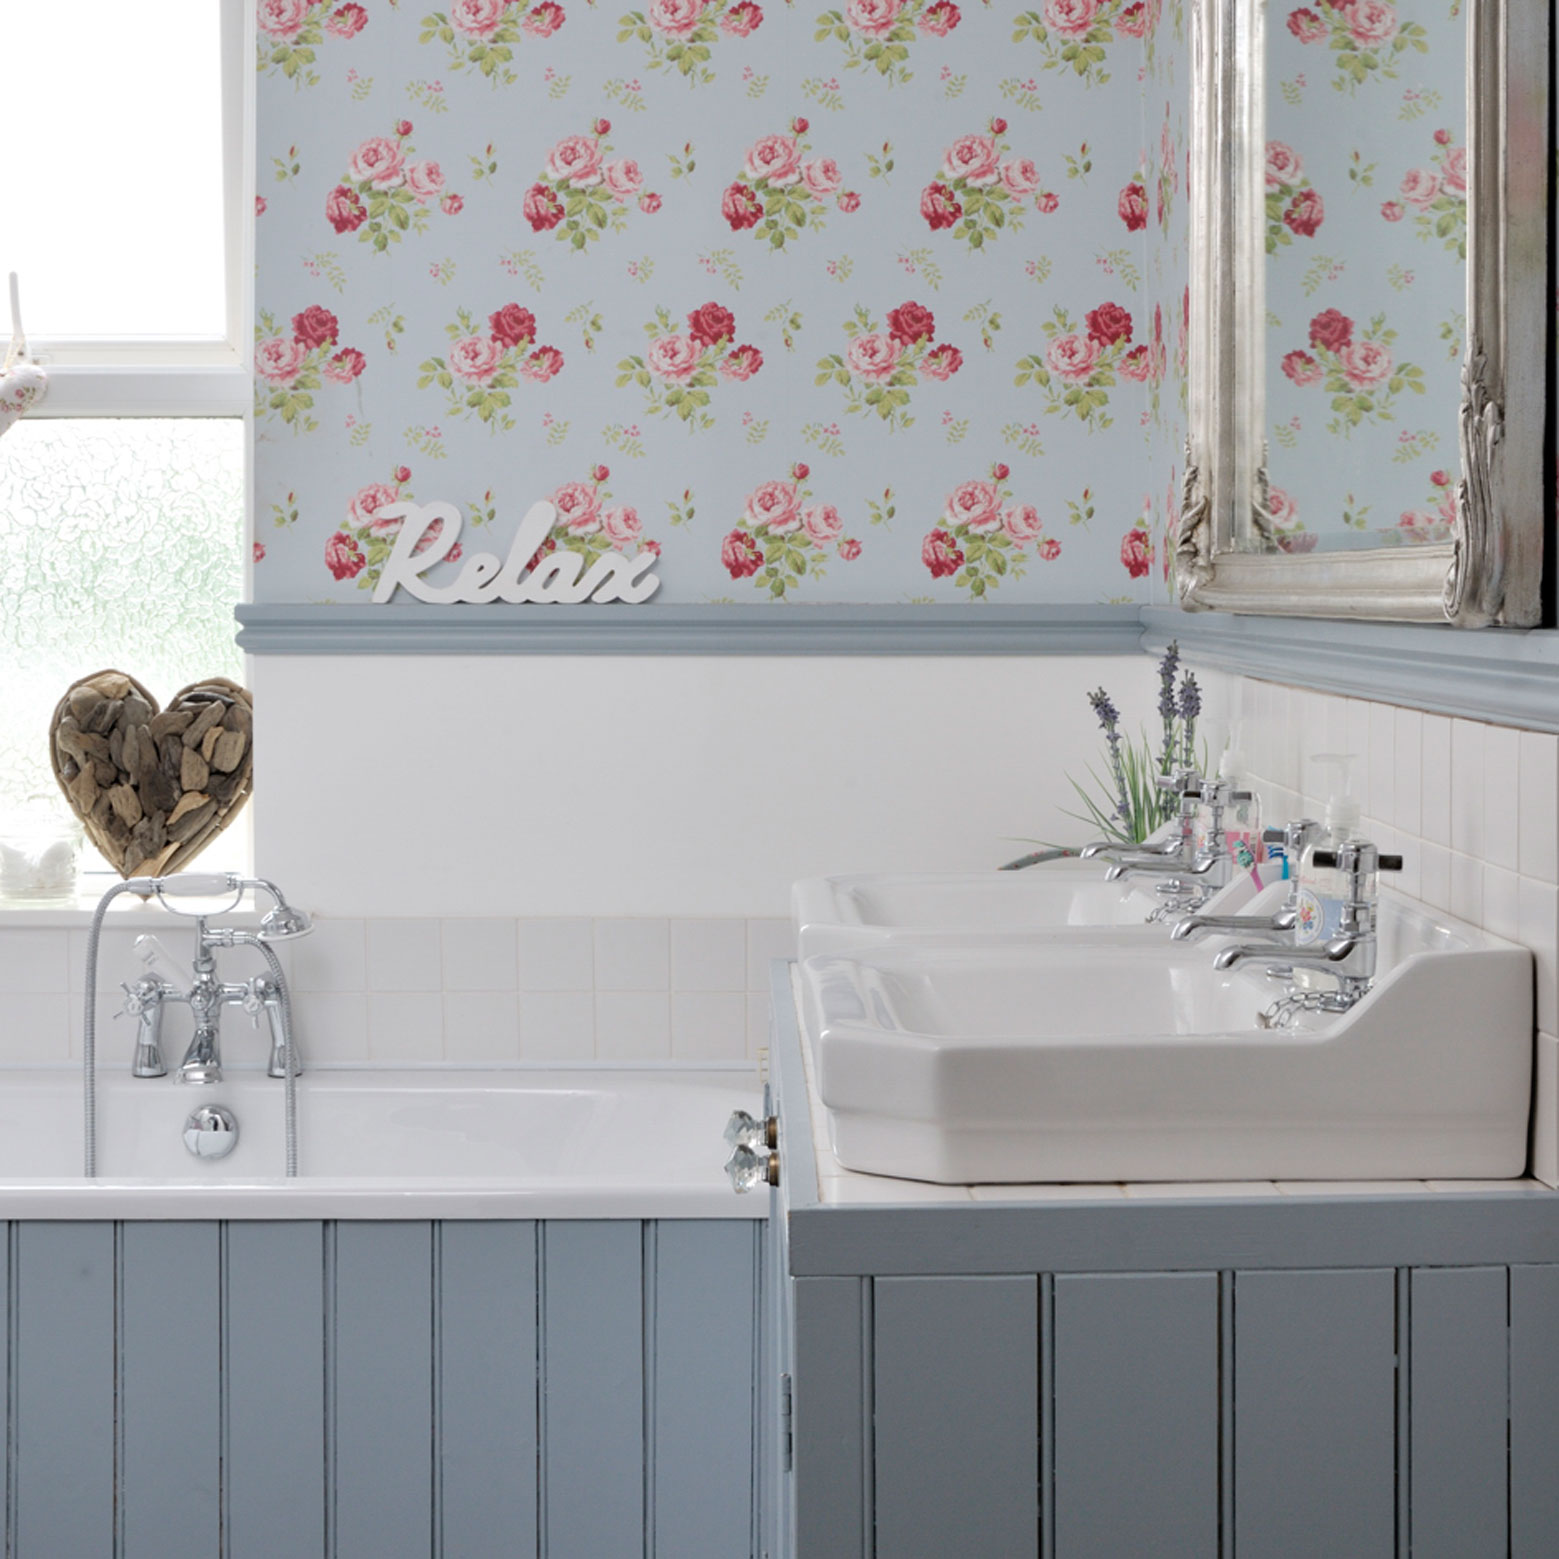 Panel your bath | Bathroom ideas | Bathroom decorating | PHOTO GALLERY | Style at Home | Housetohome.co.uk